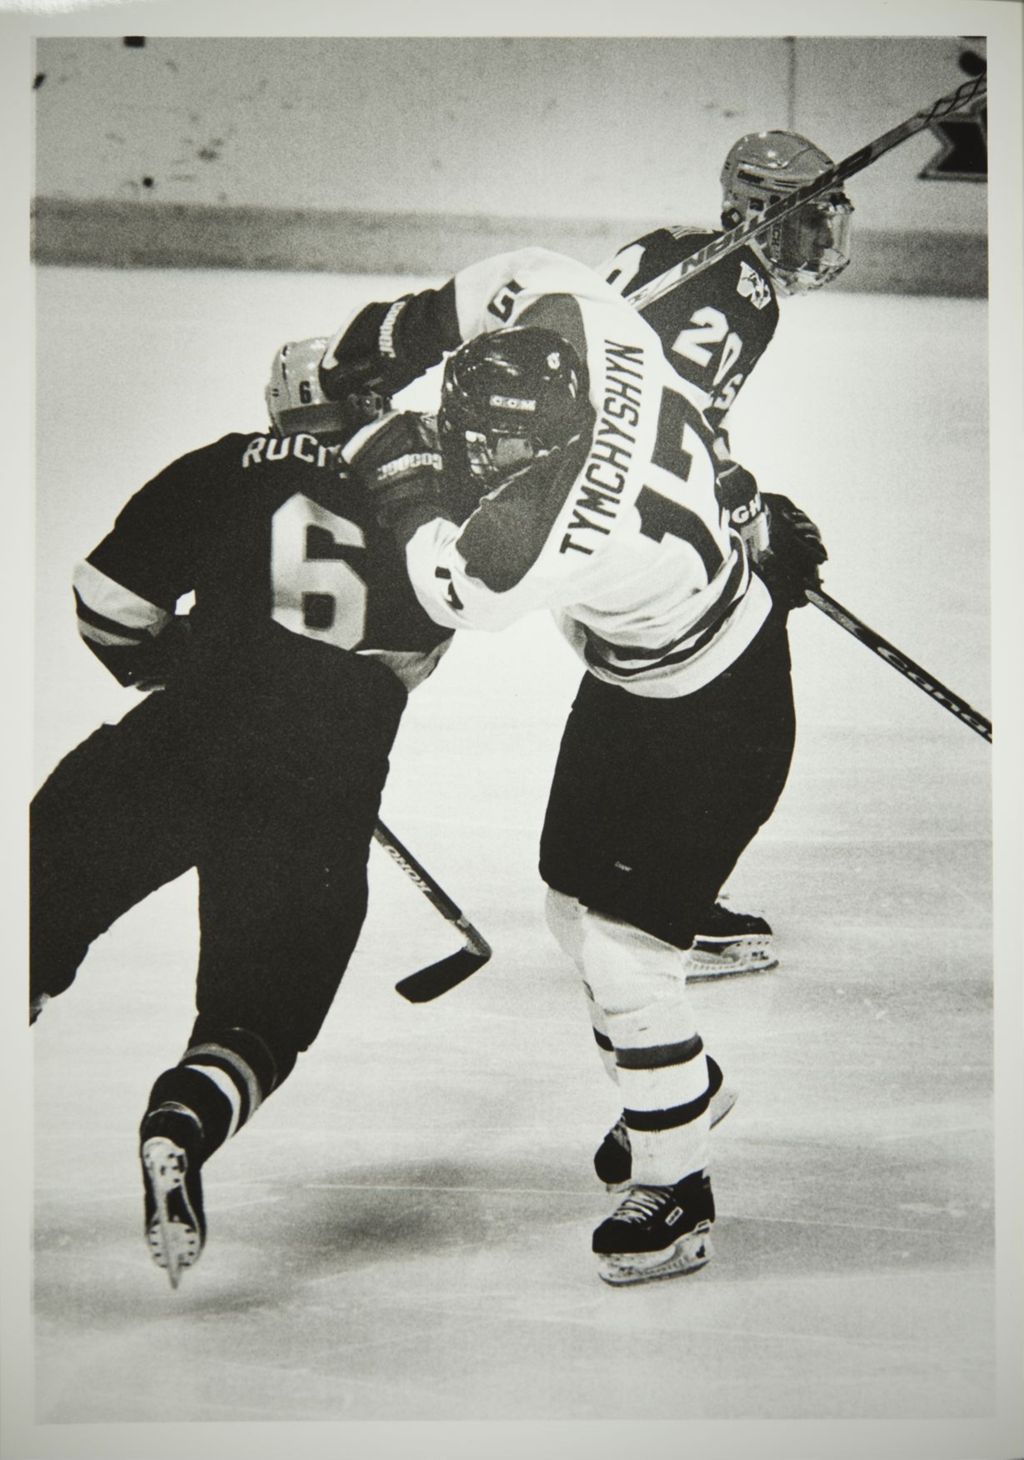 Miniature of Hockey game against Western Michigan University